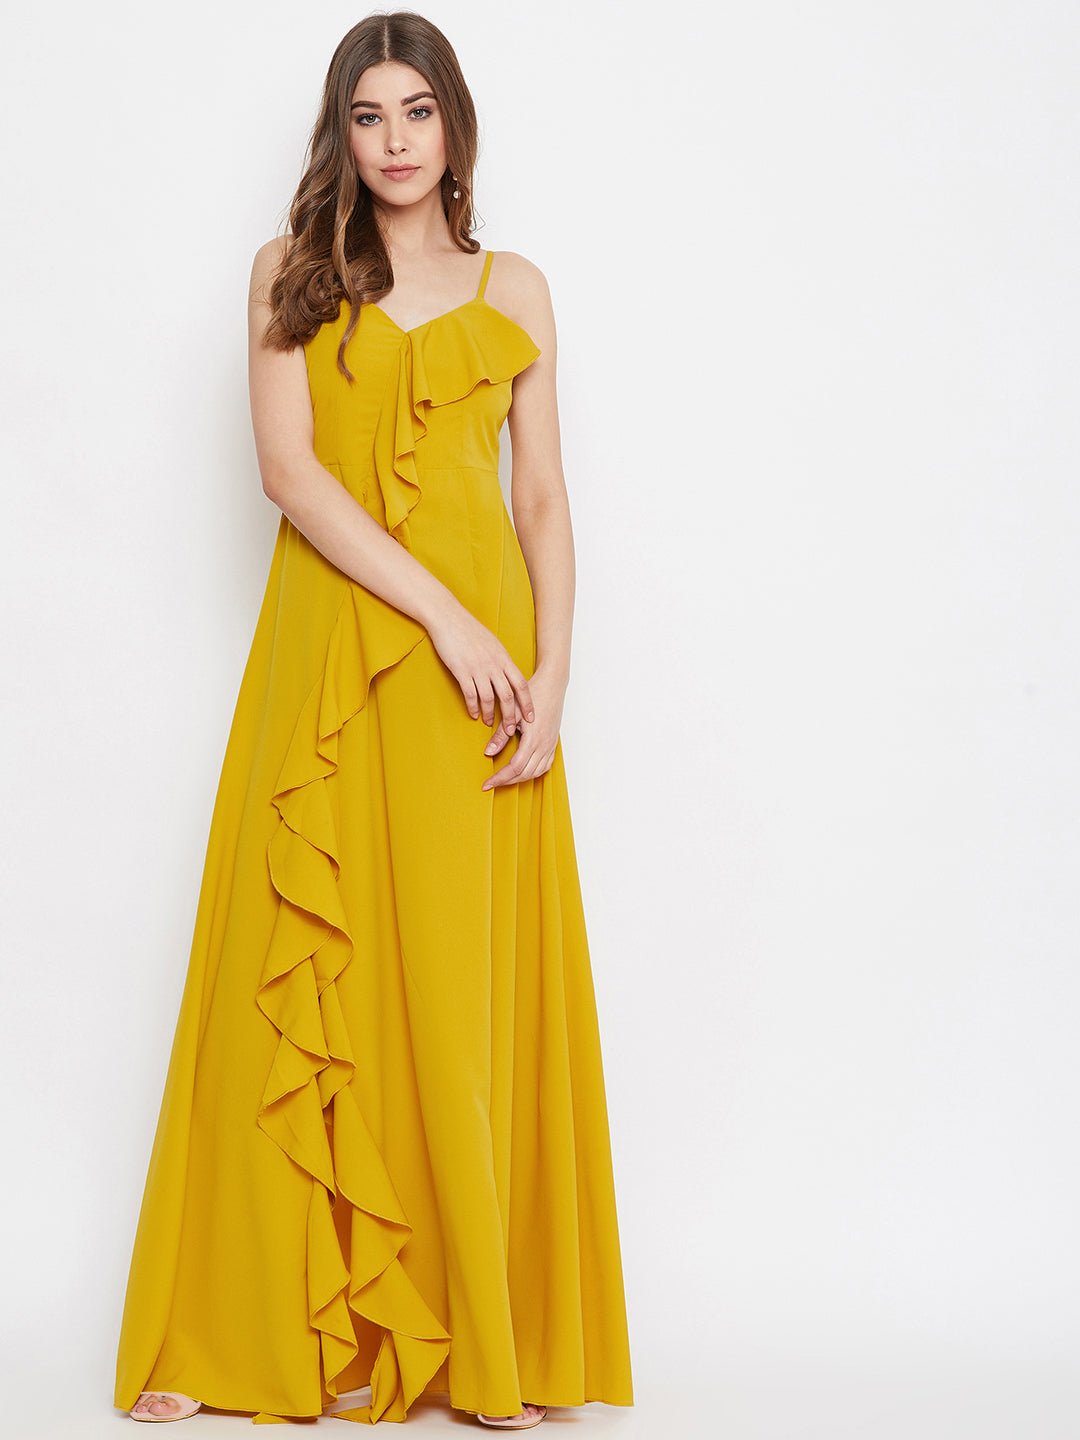 Folk Republic Women Solid Yellow Front Frill V-Neck Thigh-High Slit Maxi Dress - #folk republic#